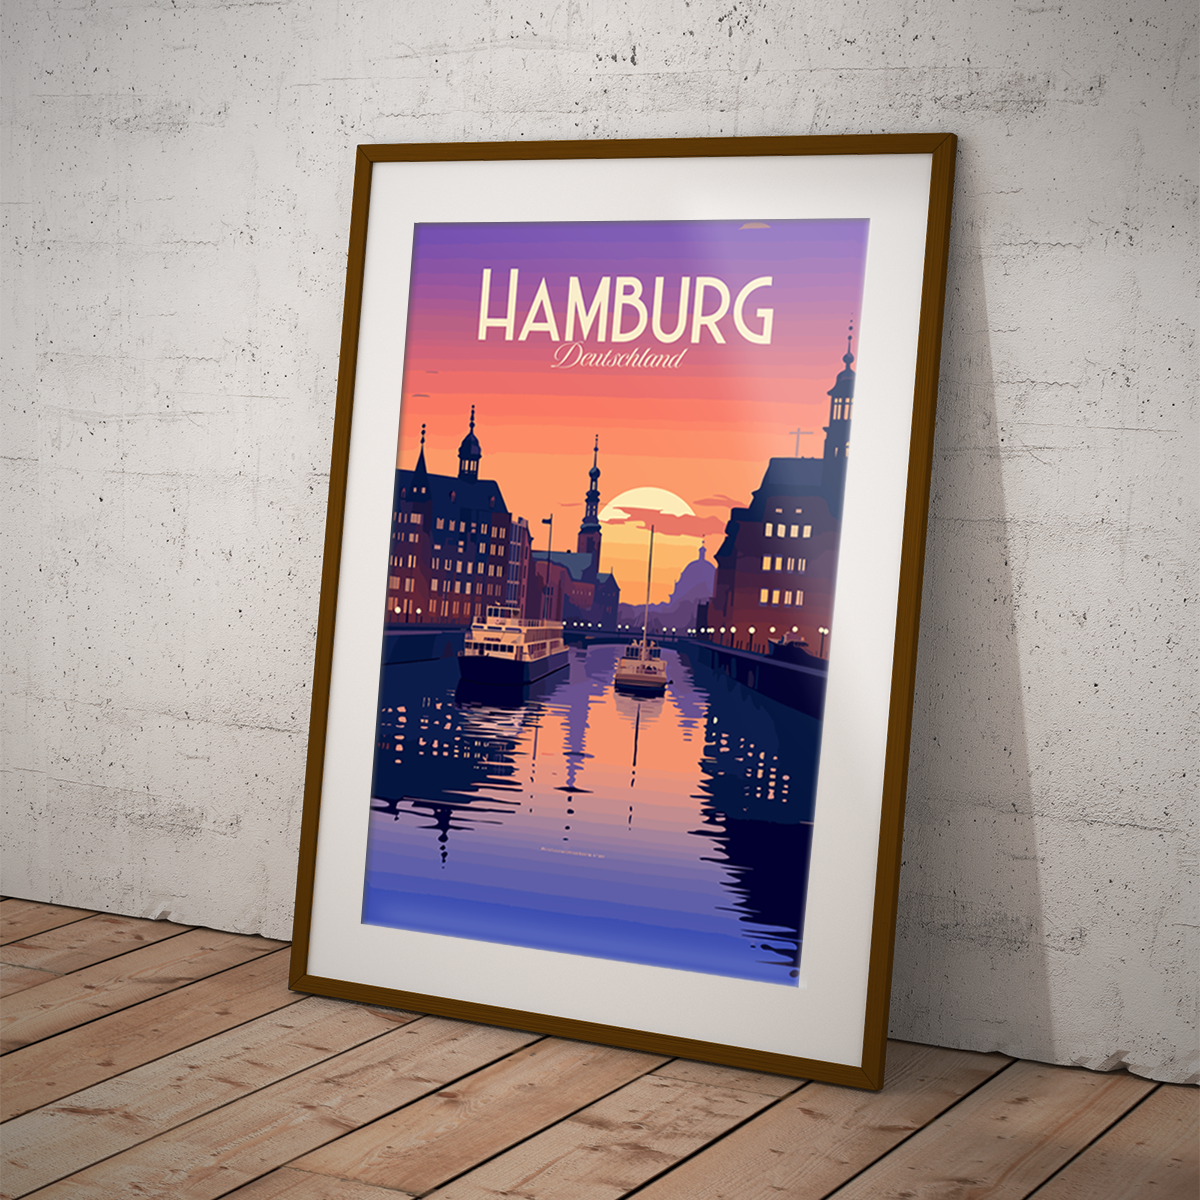 Hamburg poster by bon voyage design